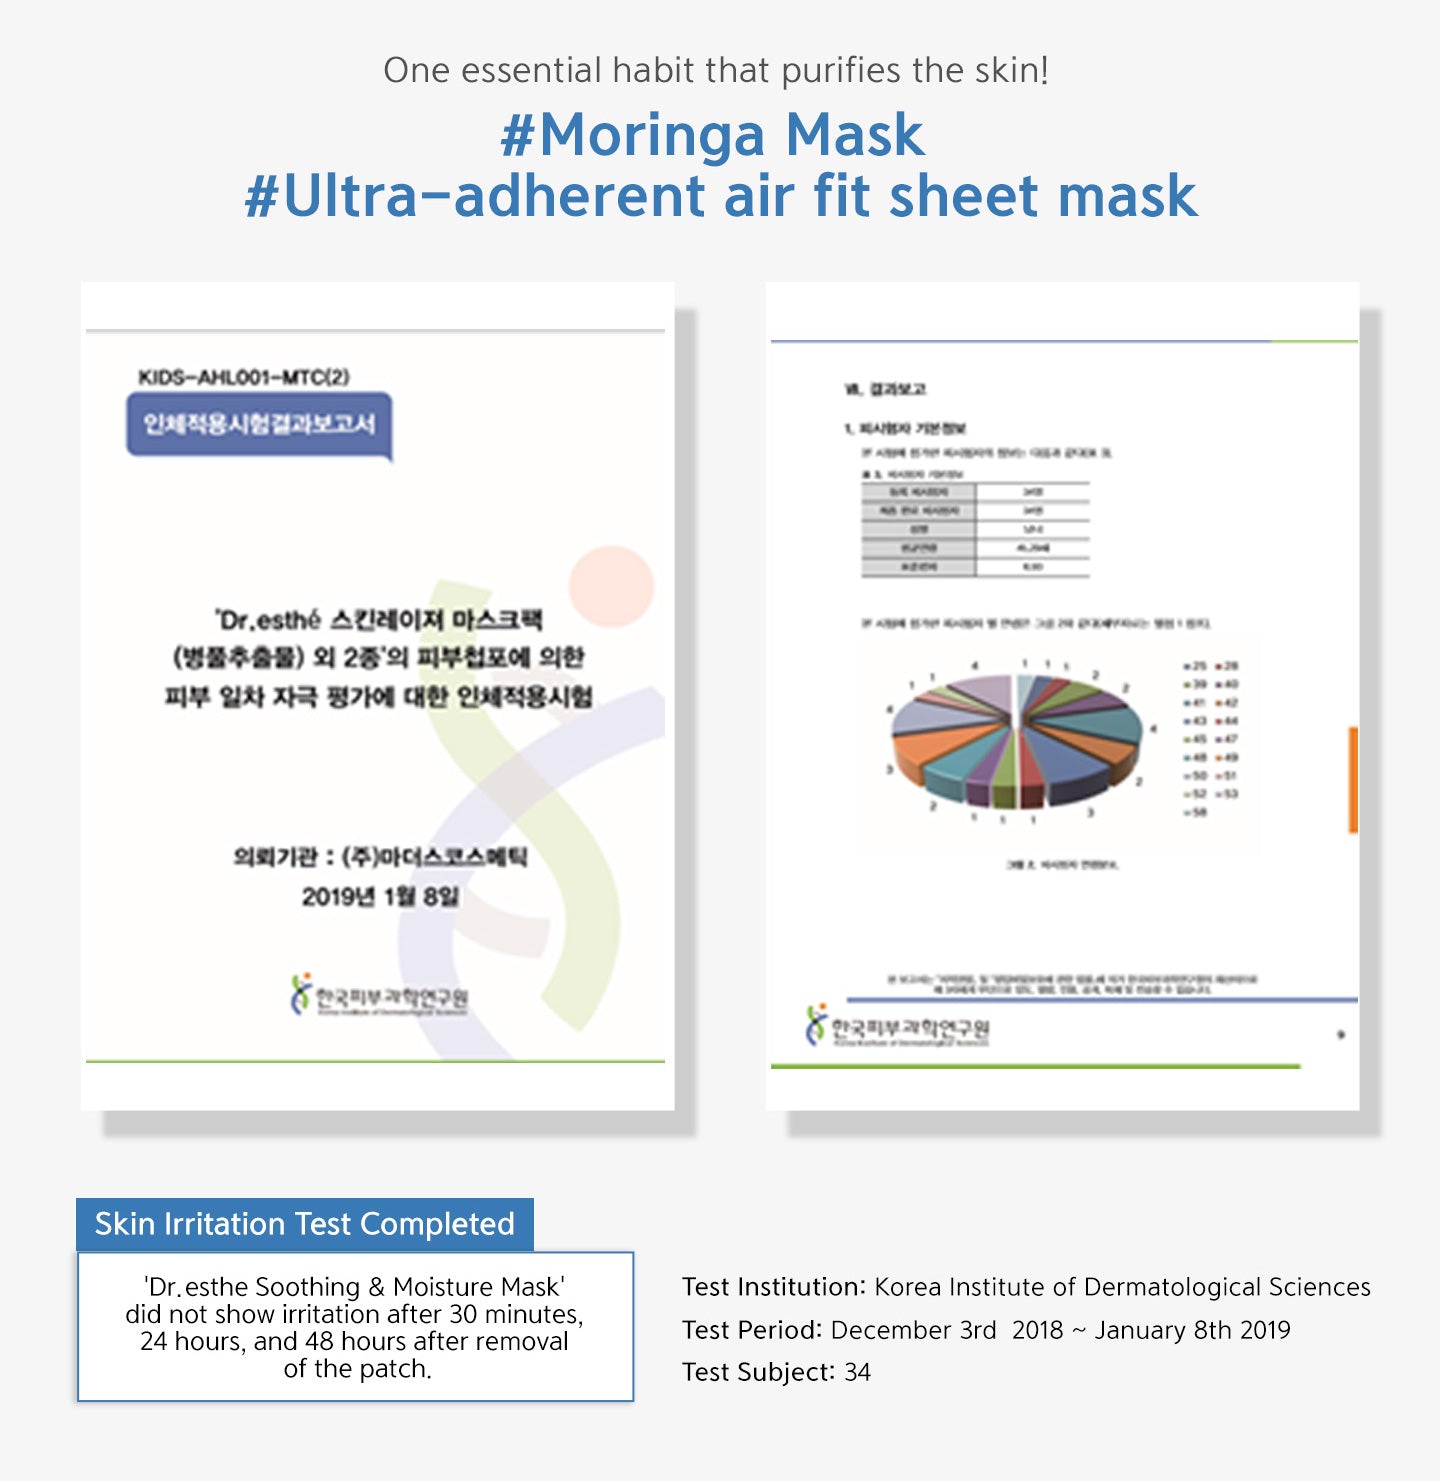 Moringa mask ultra-adherent air fit sheet mask. Skin irritation test completed. 